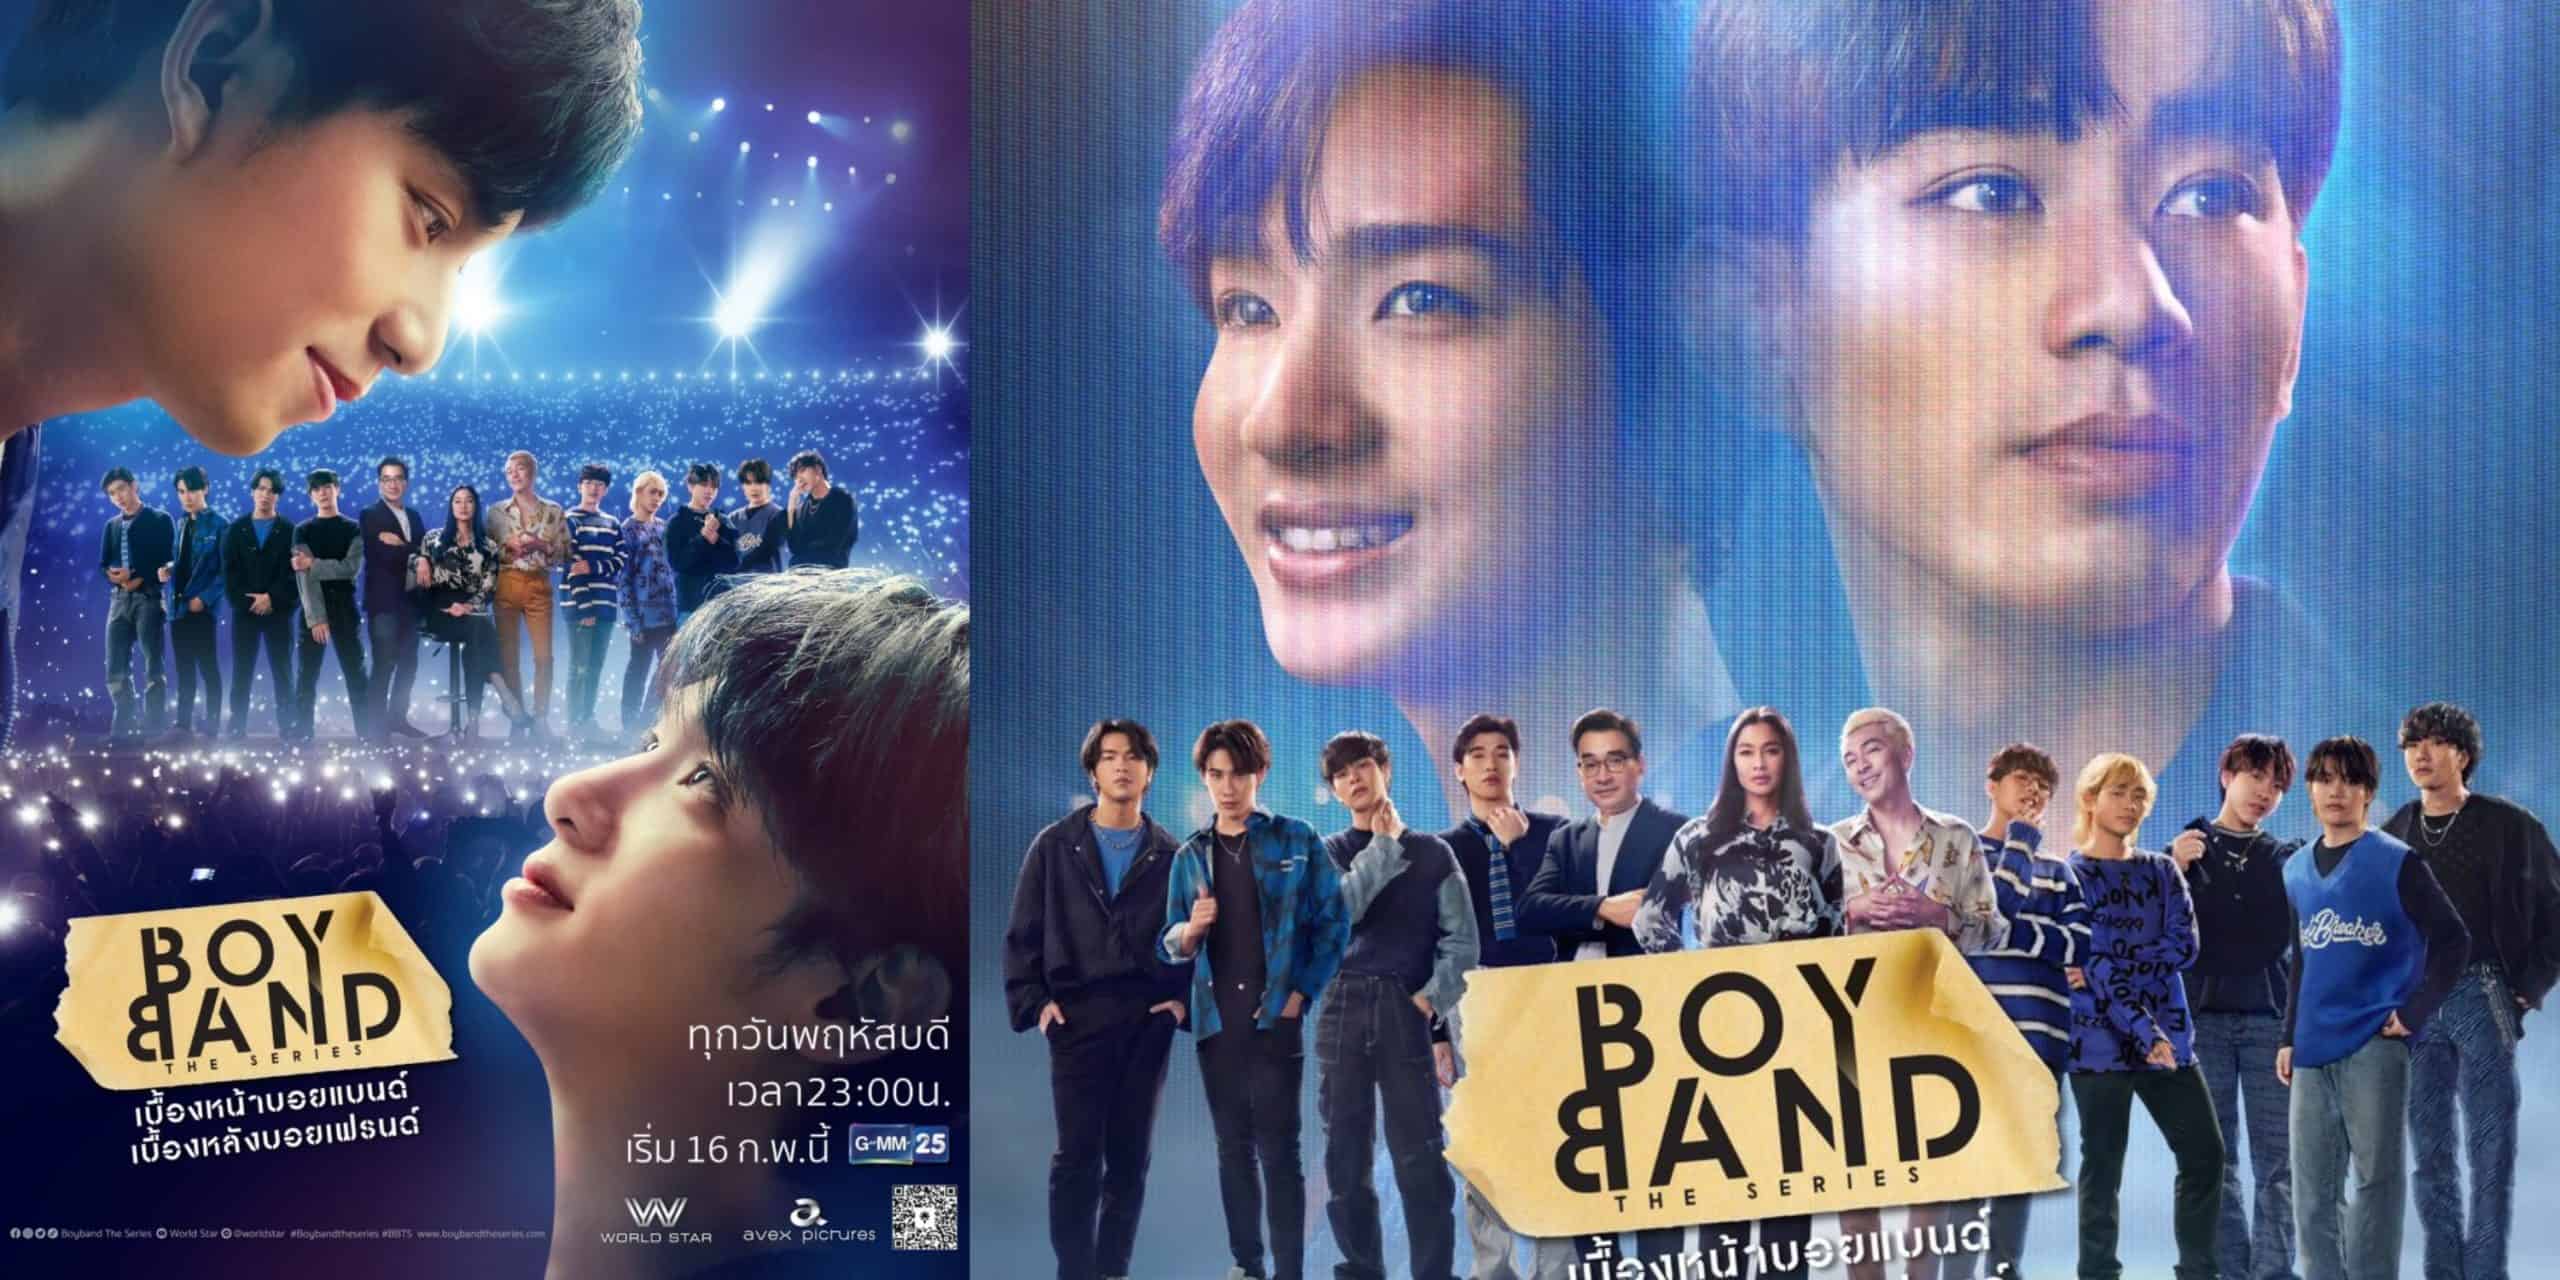 Boyband Thai BL Series Episode 5 Release Date